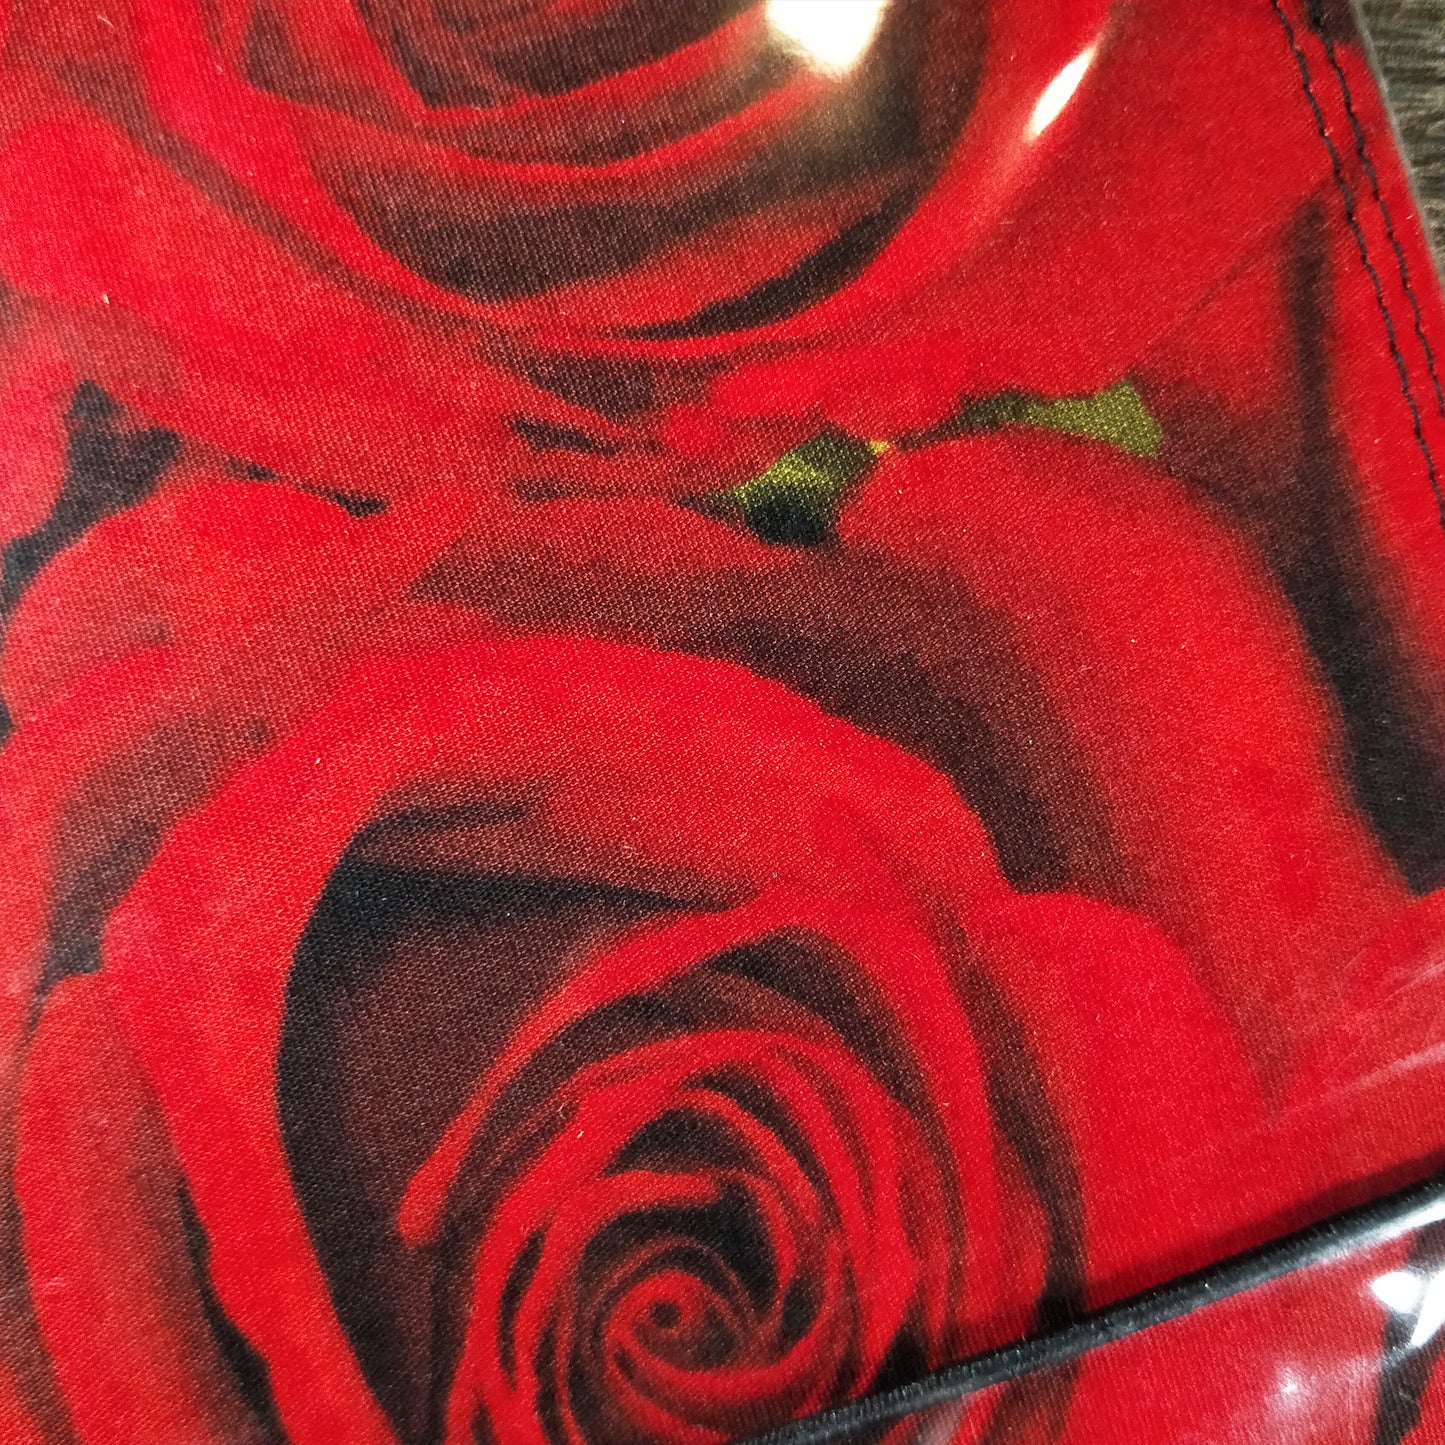 Wilddori Traveler's Notebook Cover Red Rose